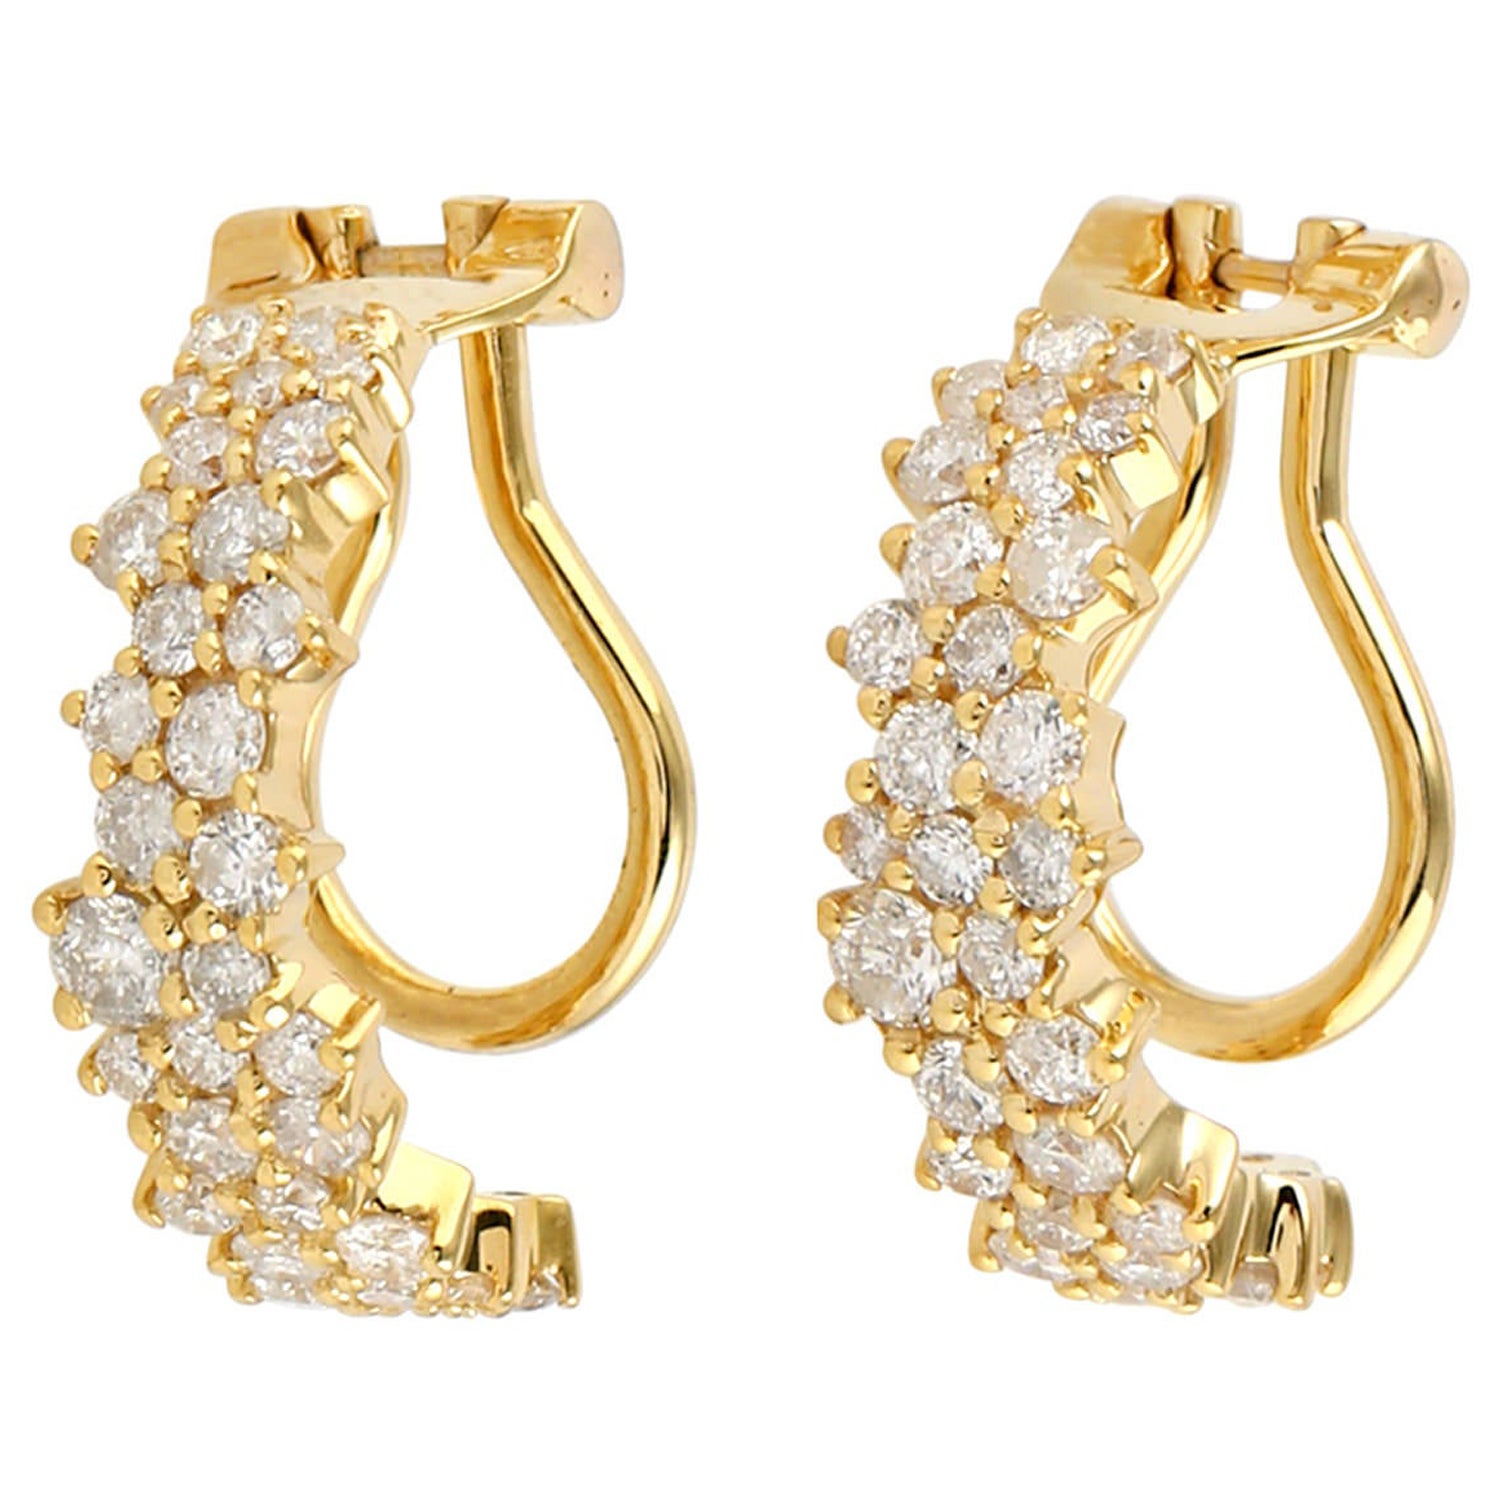 1.28 Carats Diamond 14 Karat Gold Cluster Earrings For Sale